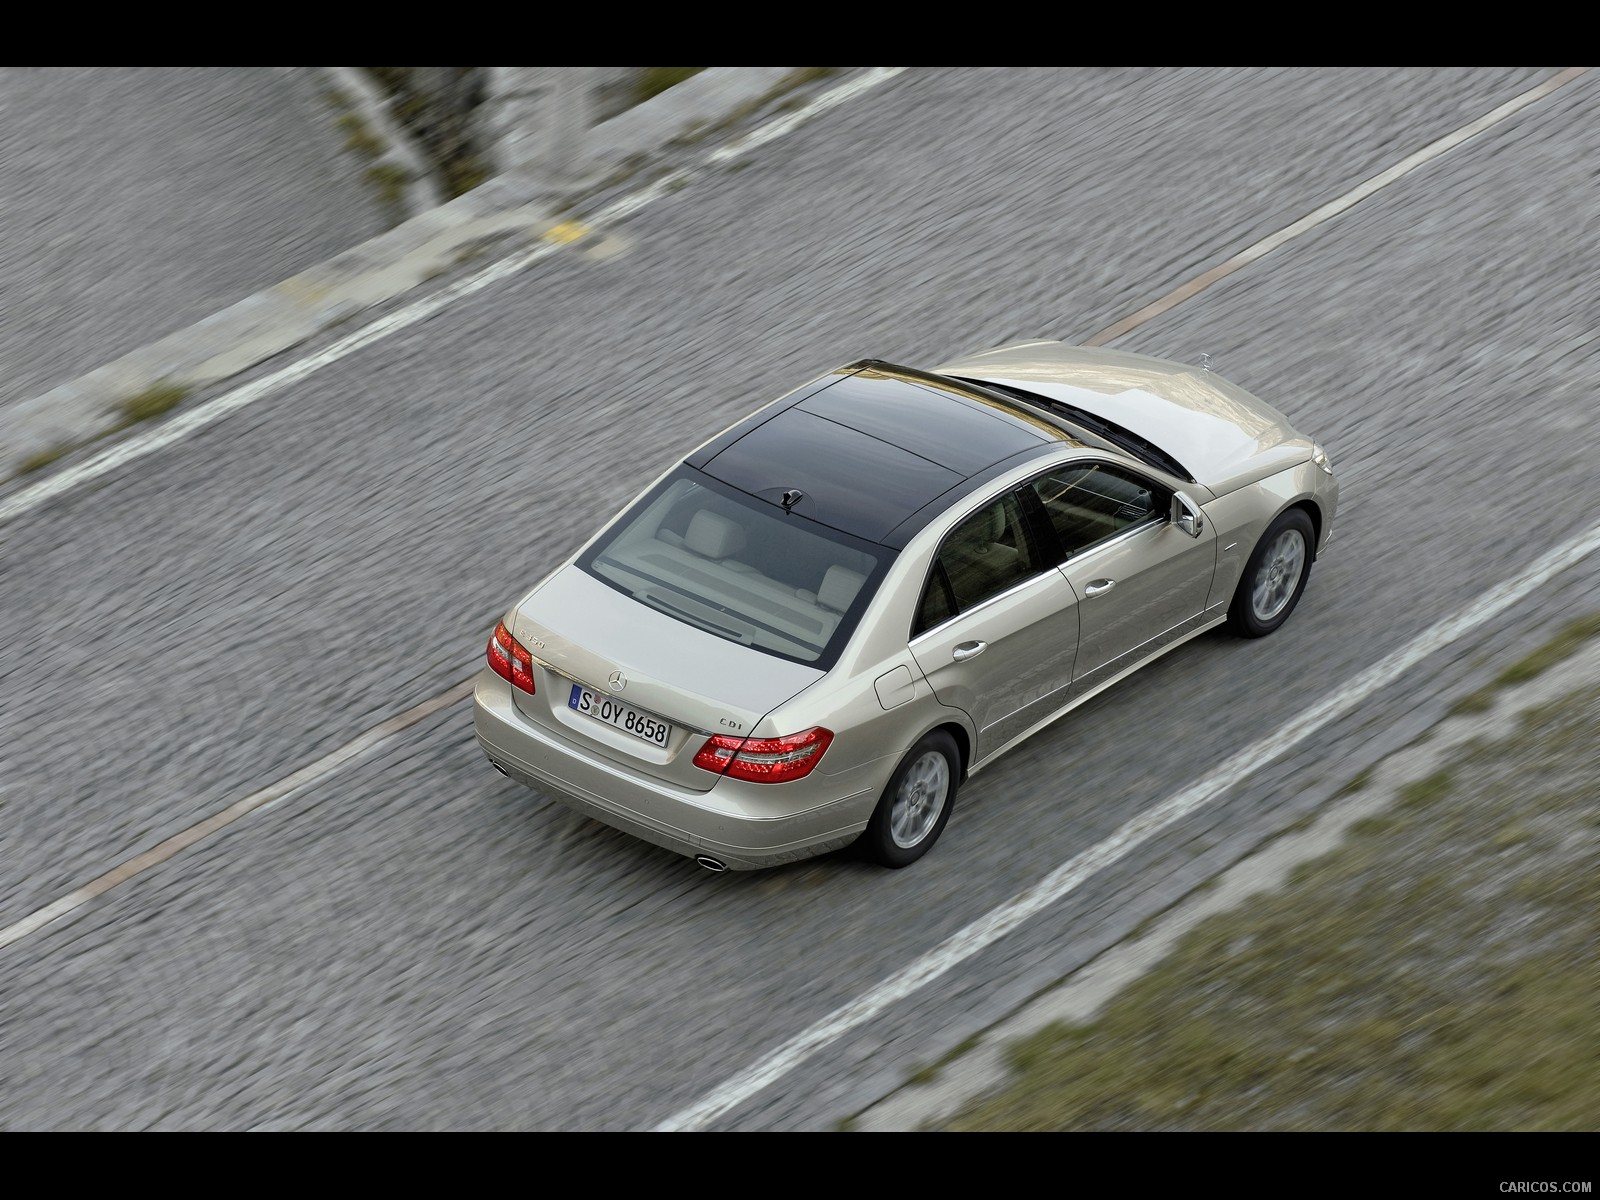 2010 Mercedes-Benz E-Class Sedan  - Top View Photo, #50 of 261